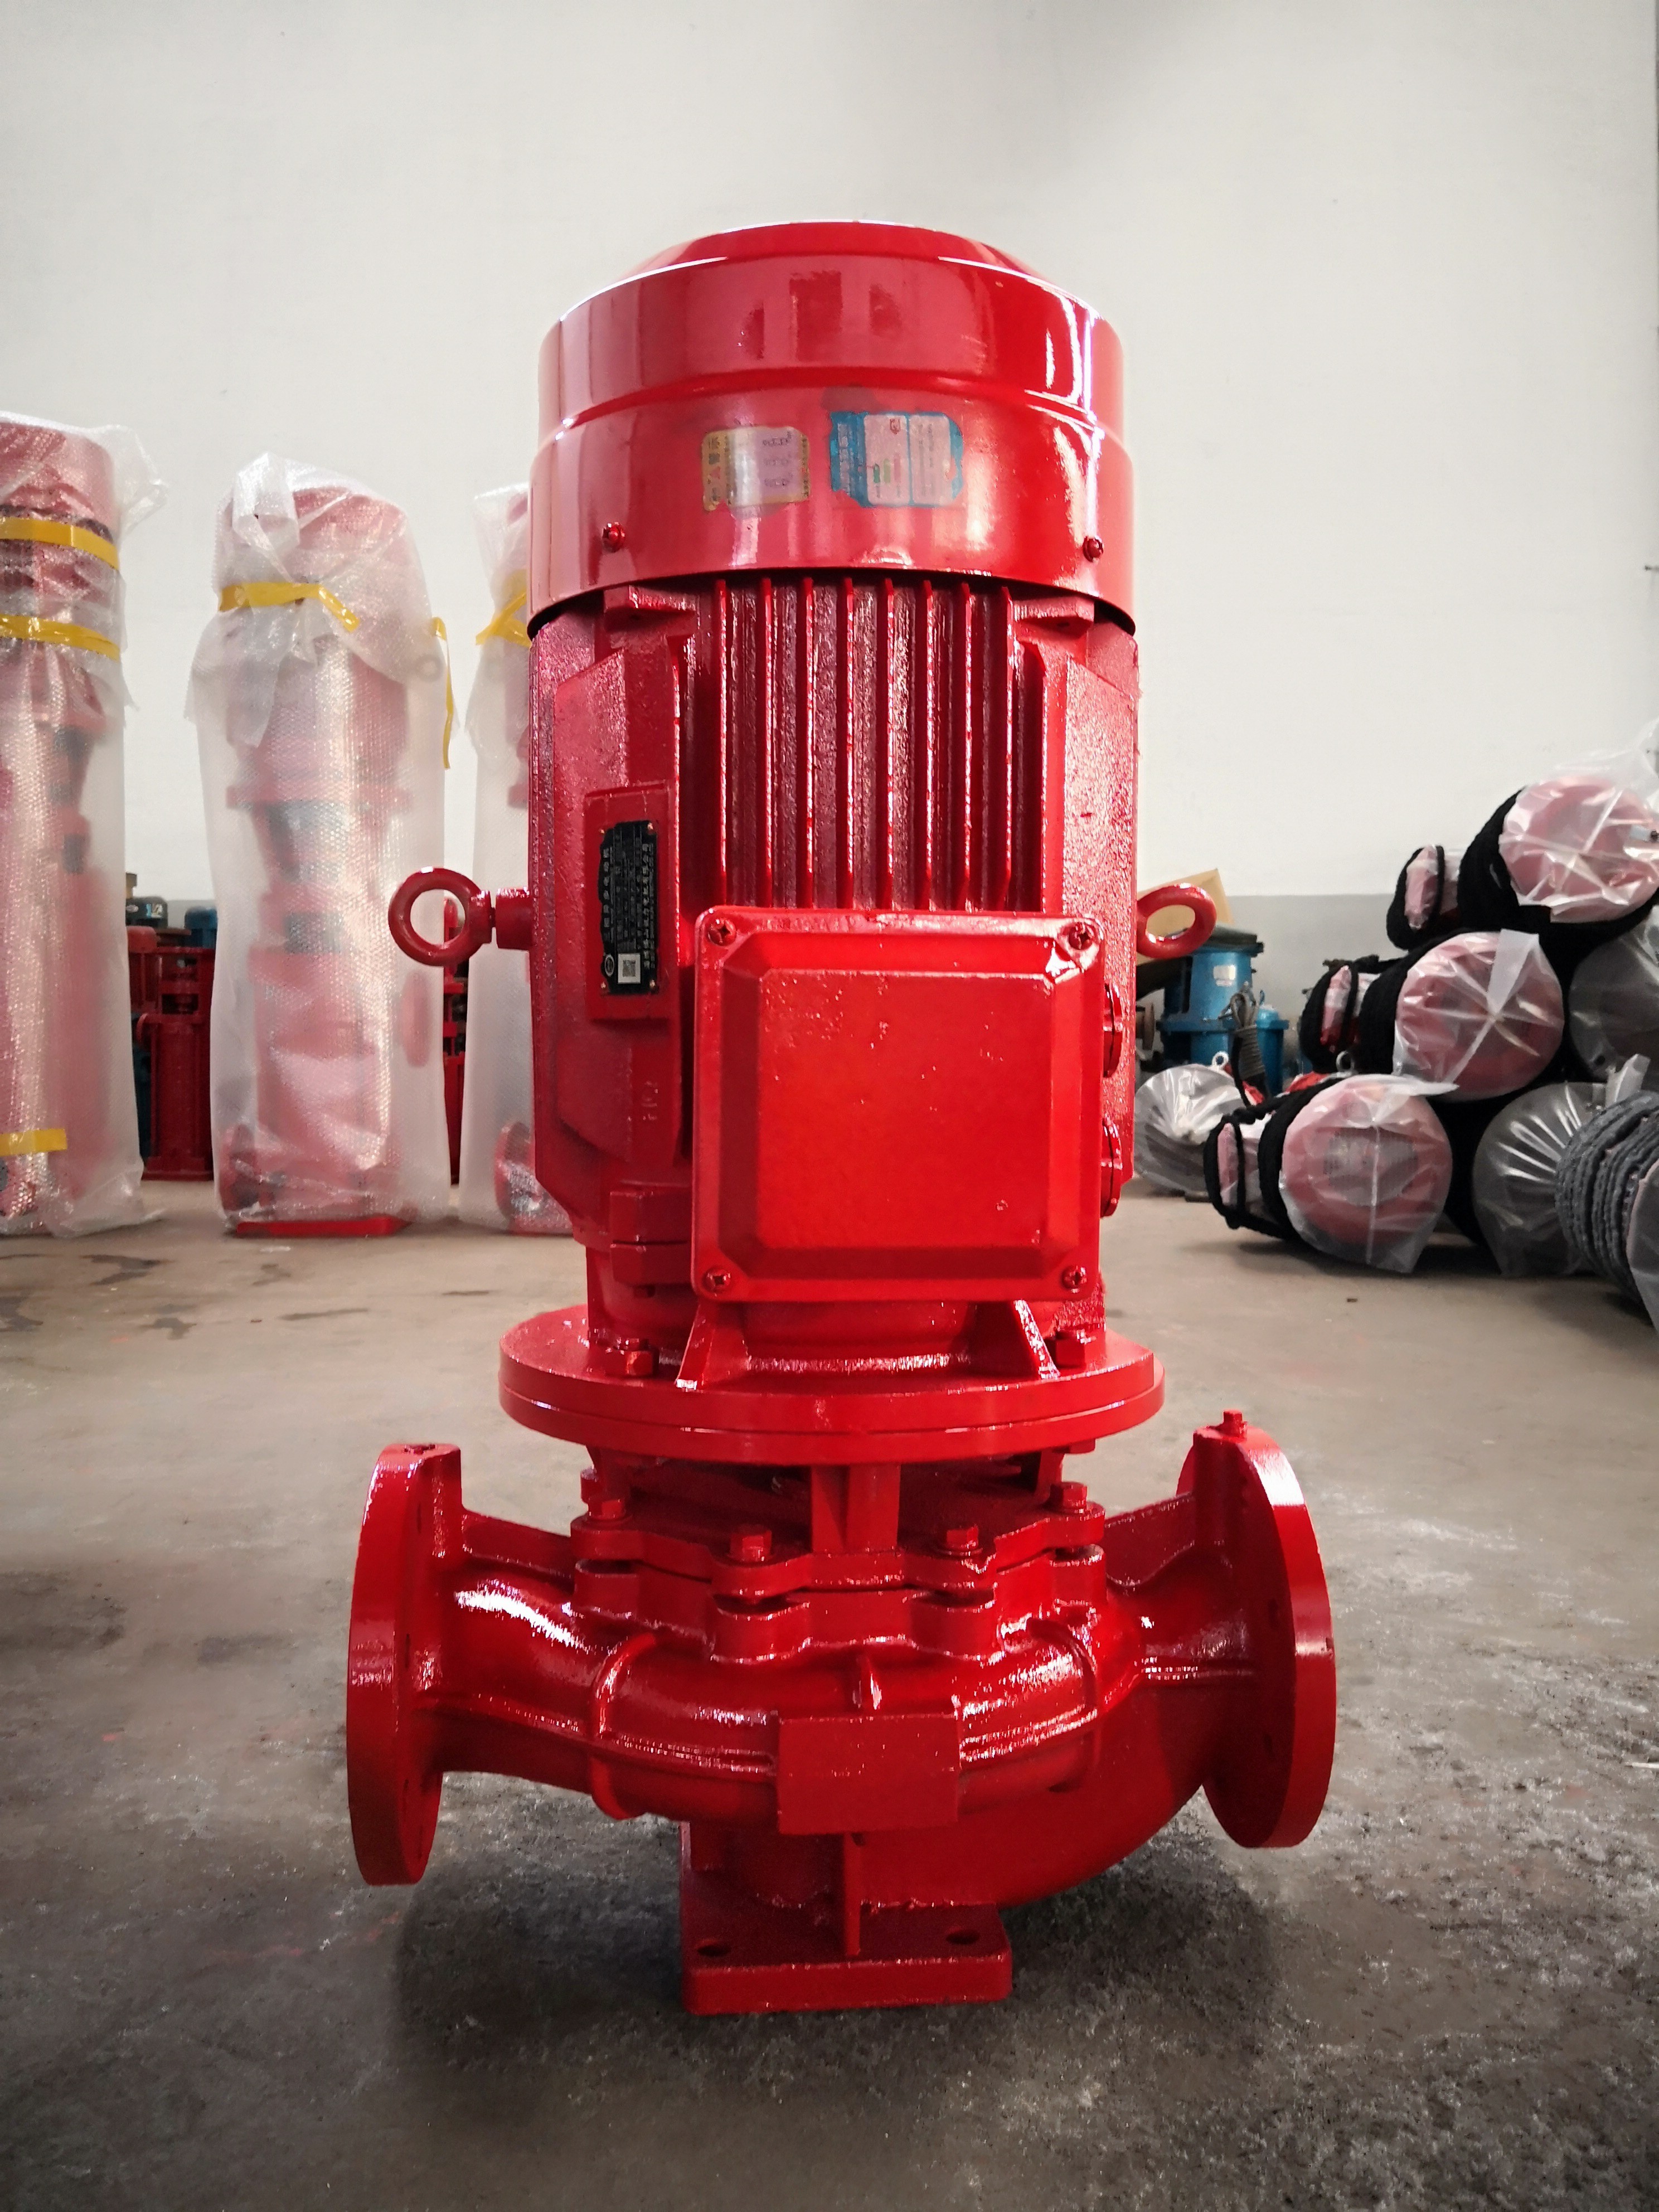 XBD－ISG系列单级立式、管道泵、单吸离心式消防泵，主要用于工业和城市消防给水【淄博正济泵业制造有限公司】图片